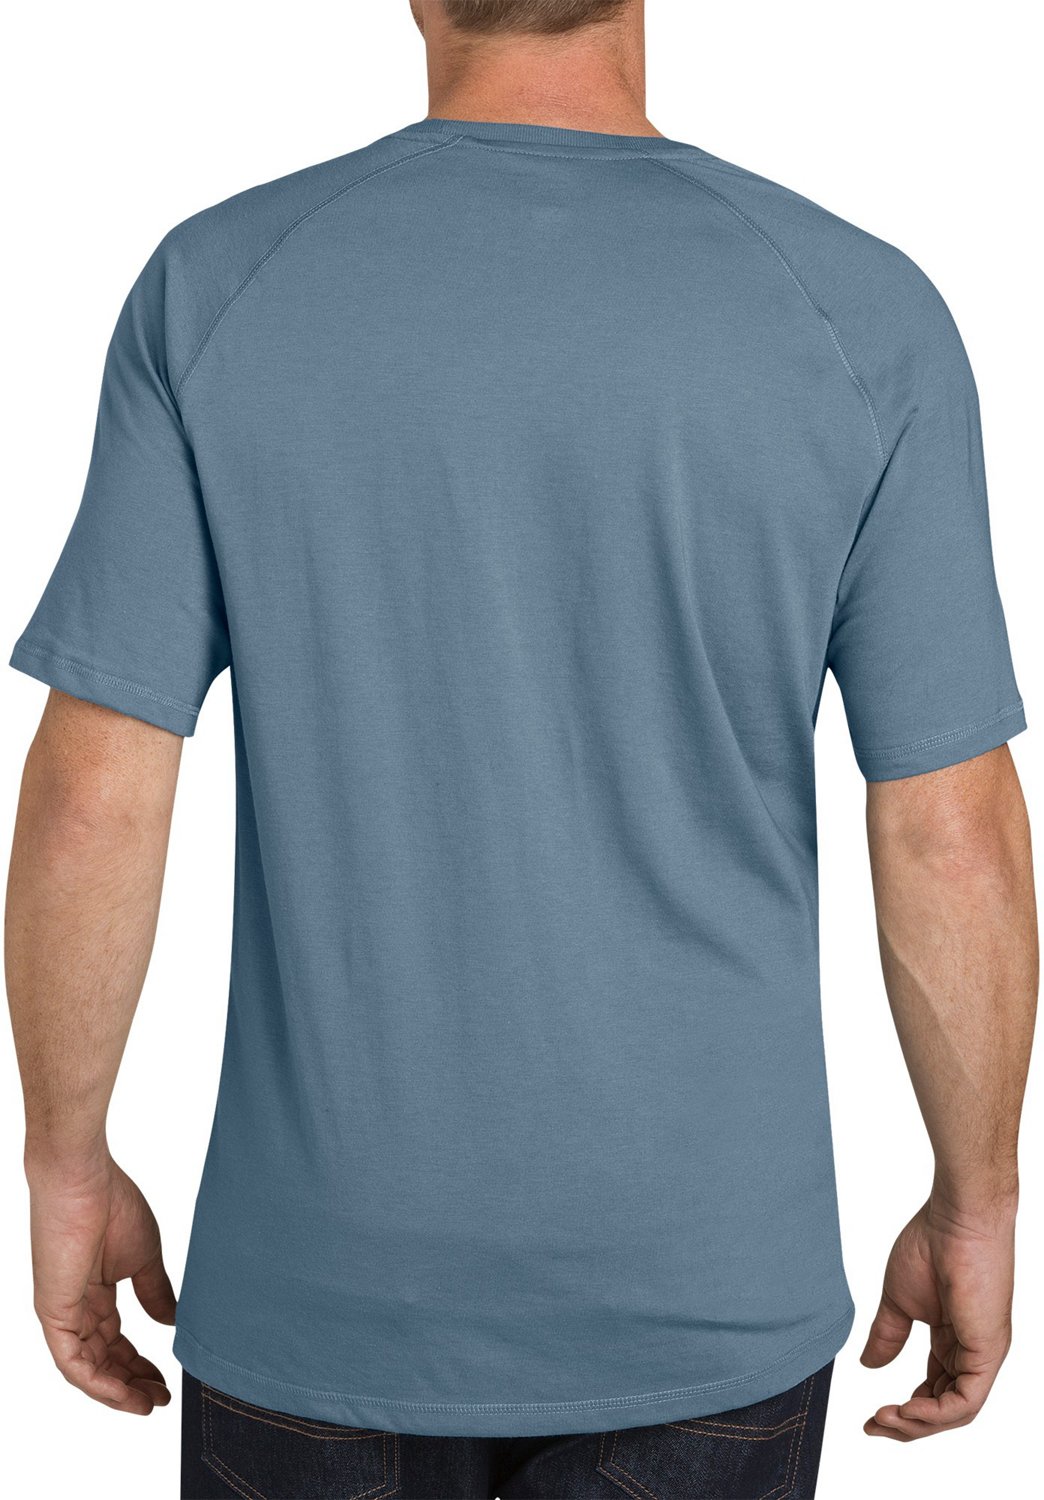 DICKIES T-Shirt TEMP IQ schwarz grau oder lime Baumwolle Elasthan UV Schutz NEU 